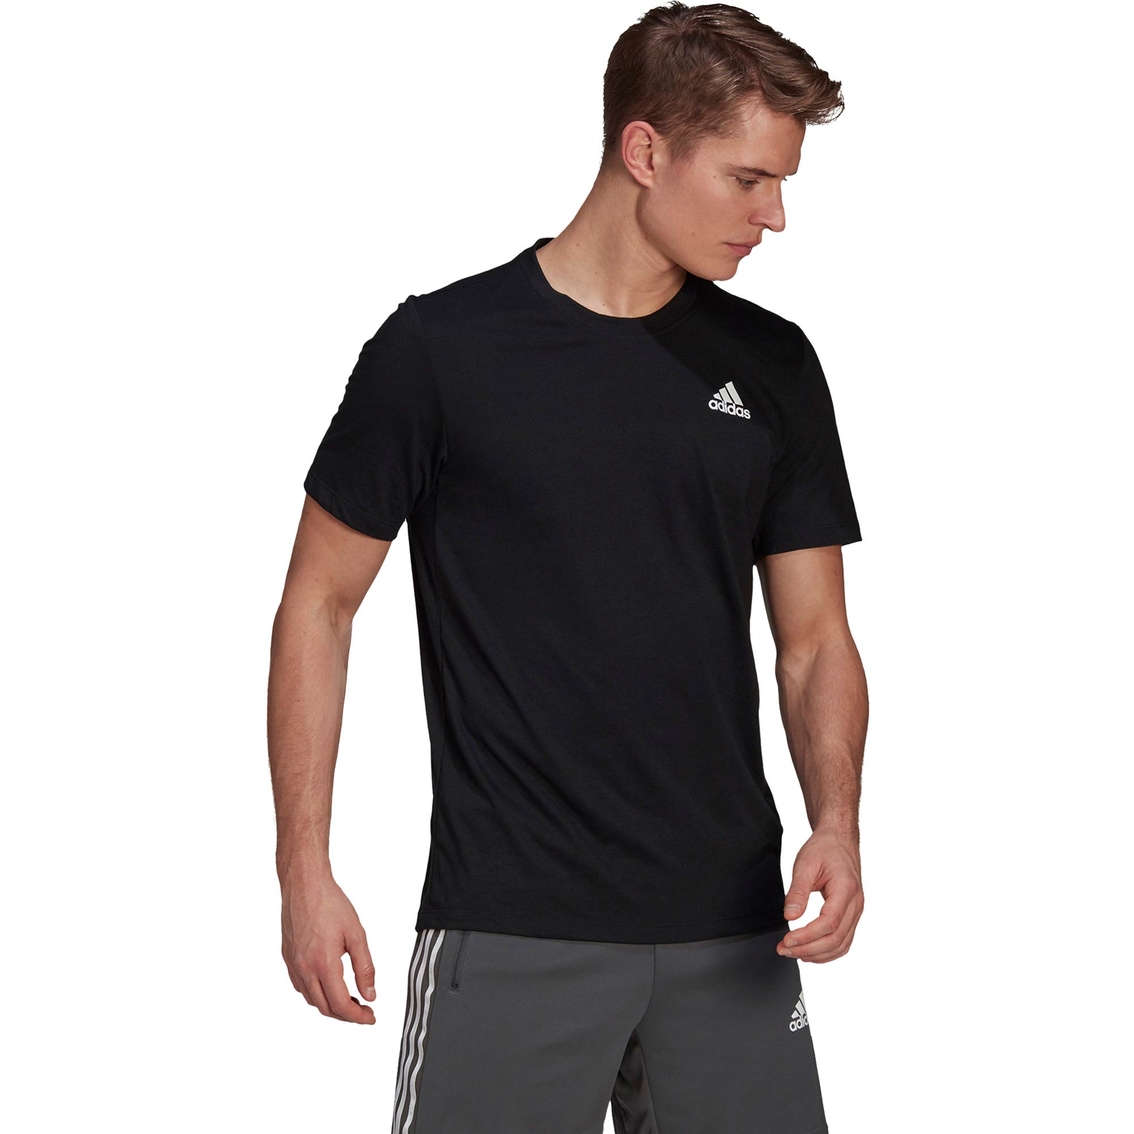 Adidas Aeroready Design 2 Move Sport Tee | Shirts | Clothing ...